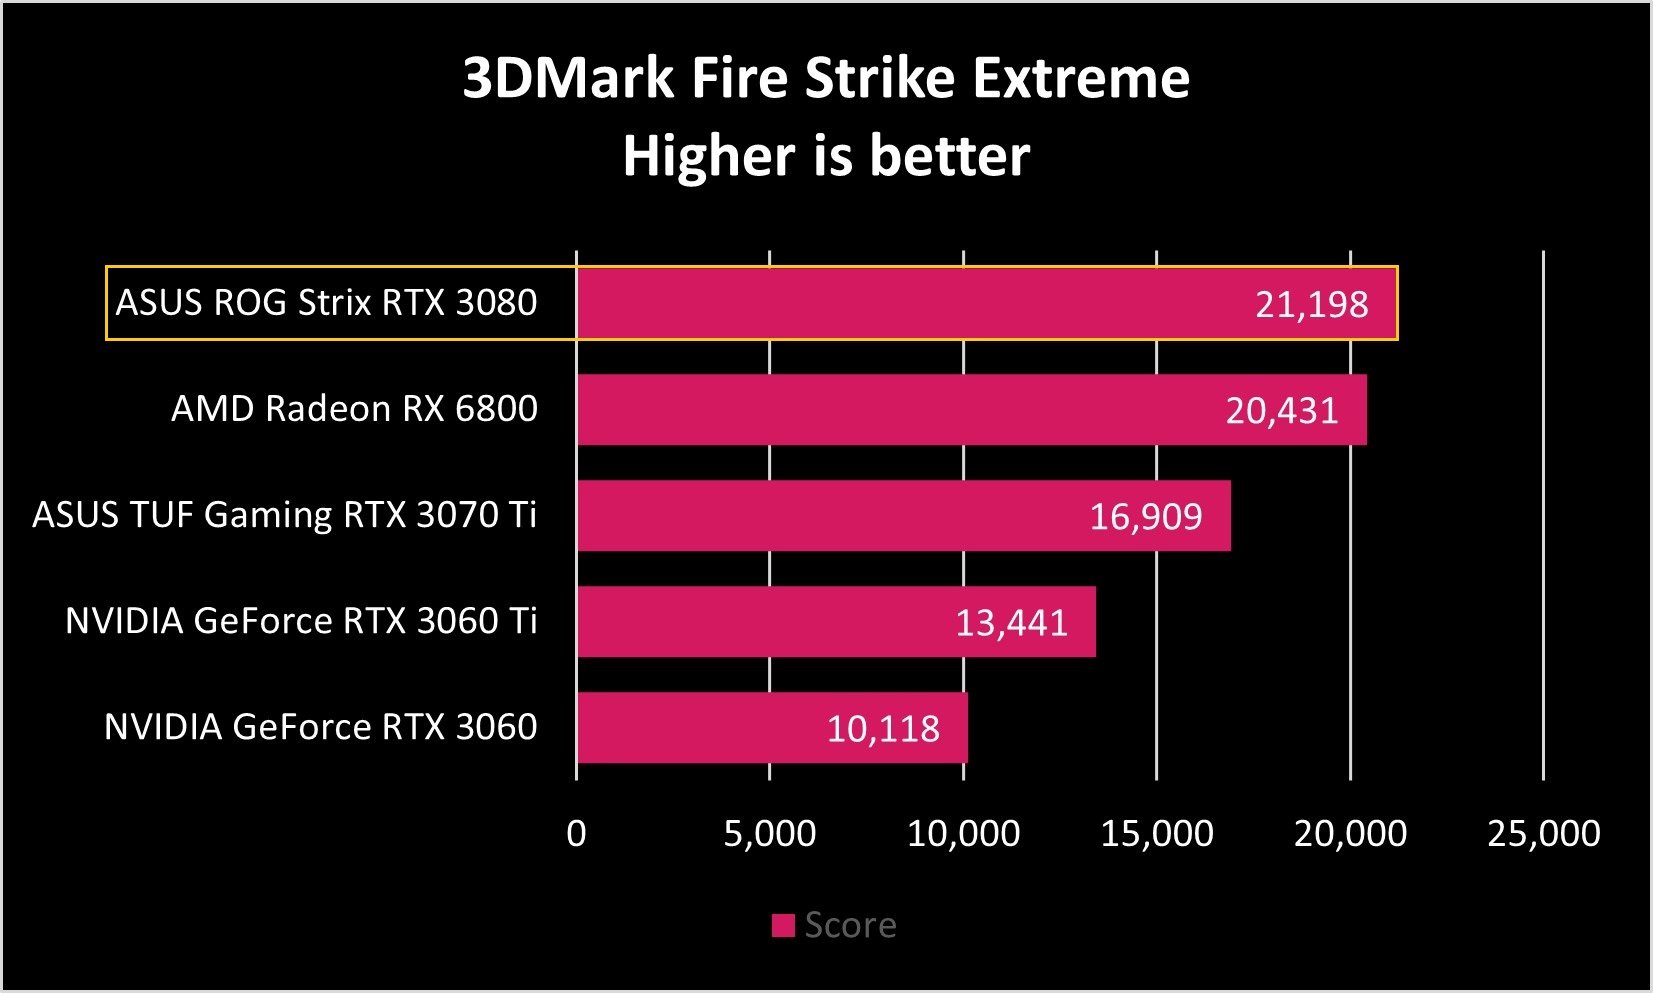 ASUS ROG Strix RTX 3080 FireStrike Extreme